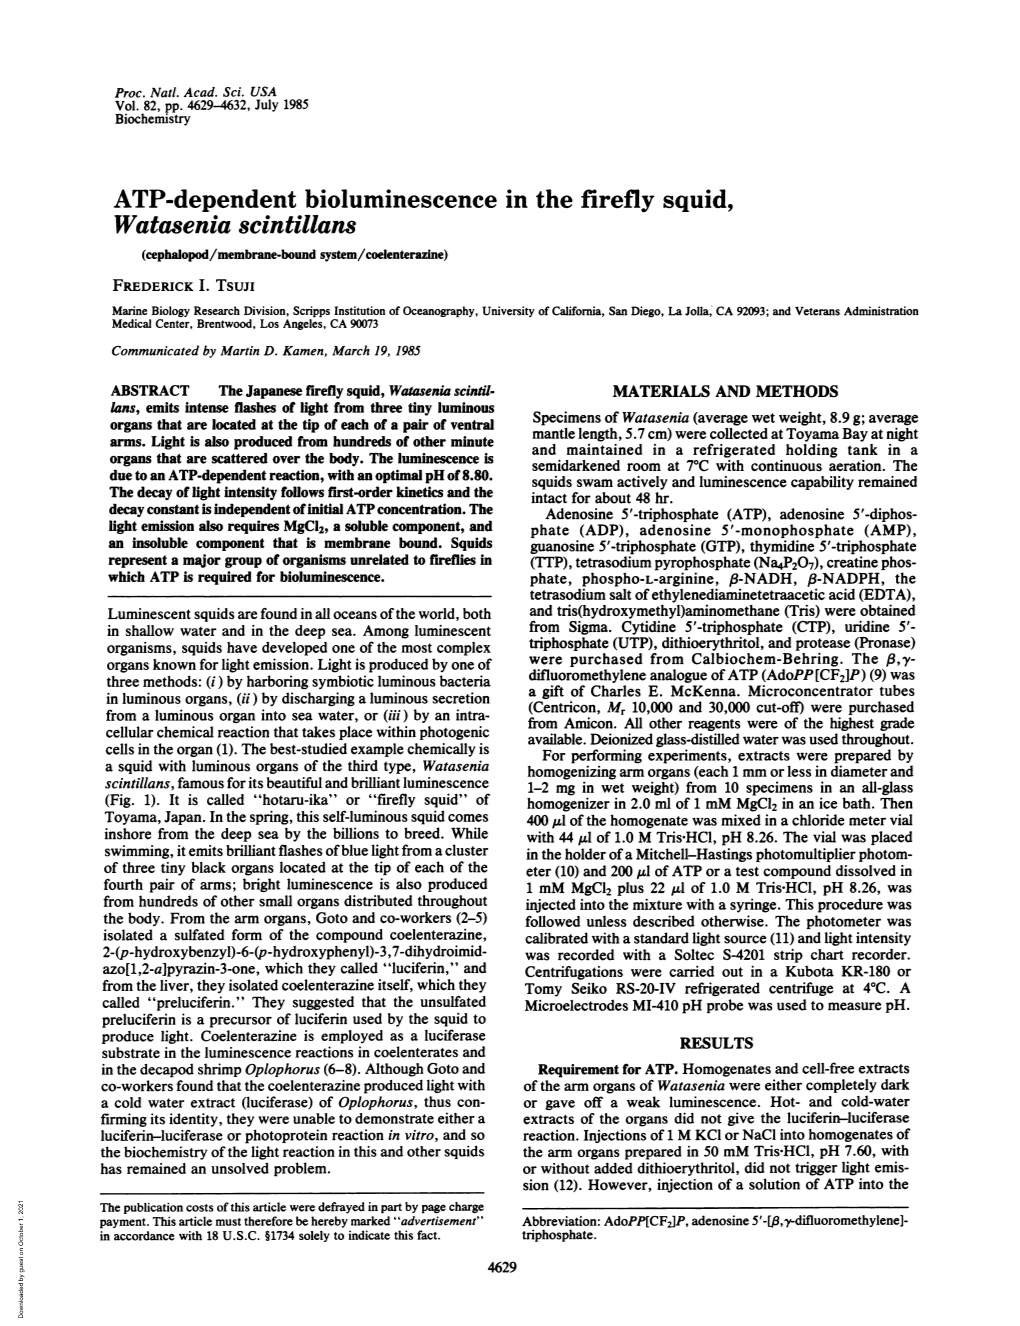 ATP-Dependent Bioluminescence in the Firefly Squid, Watasenia Scintillans (Cephalopod/Membrane-Bound System/Coelenterazine) FREDERICK I